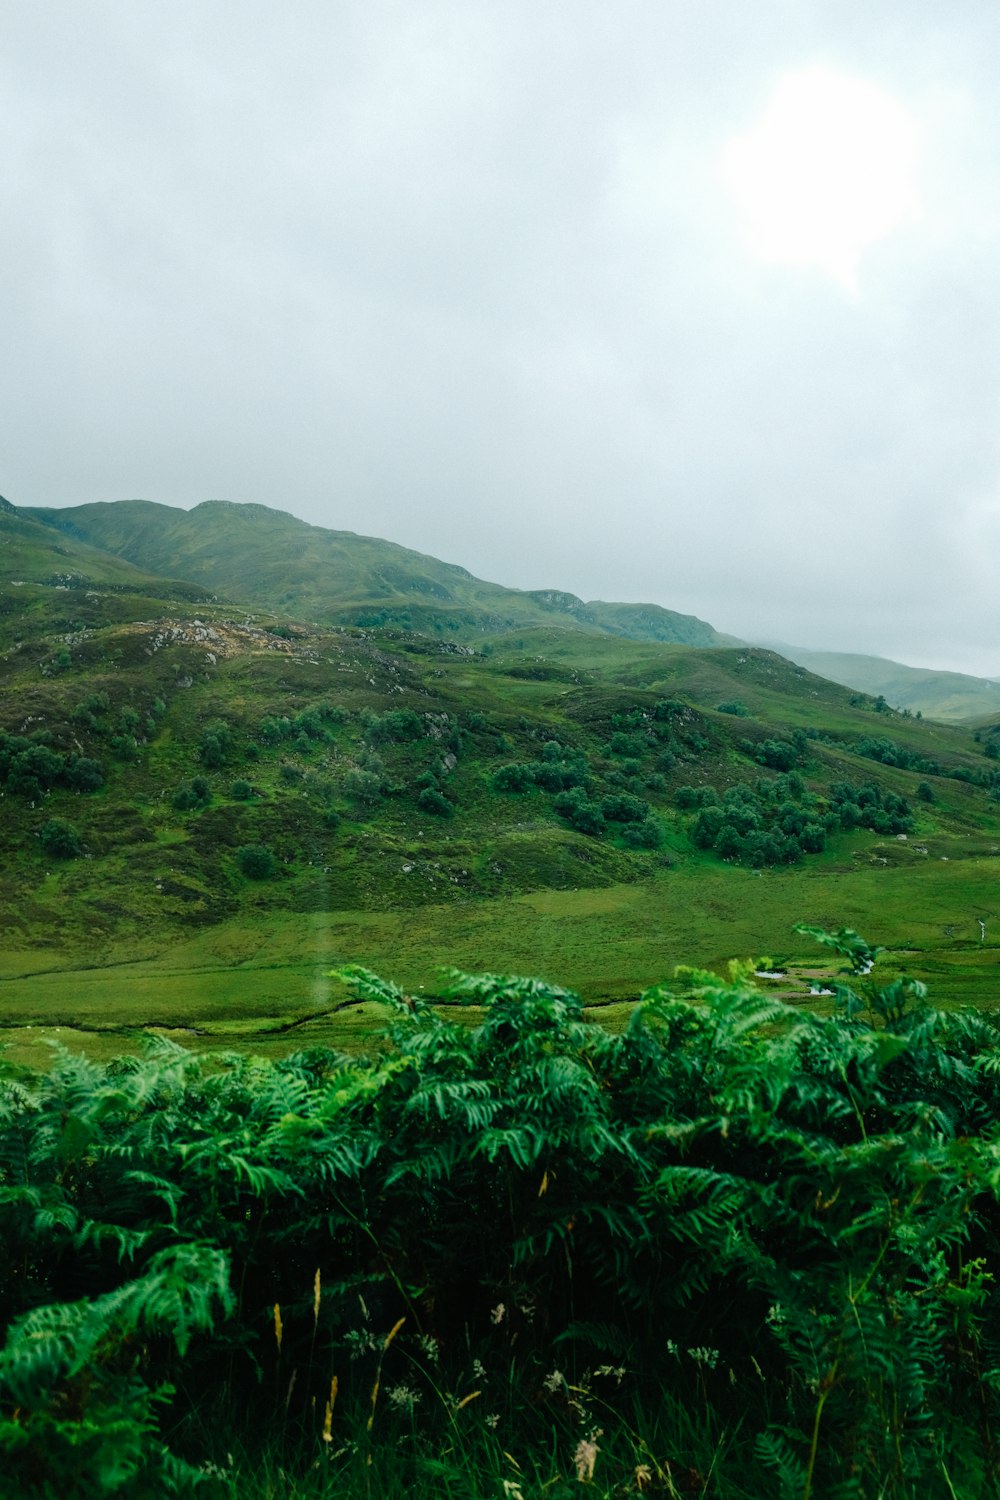 a green hilly landscape